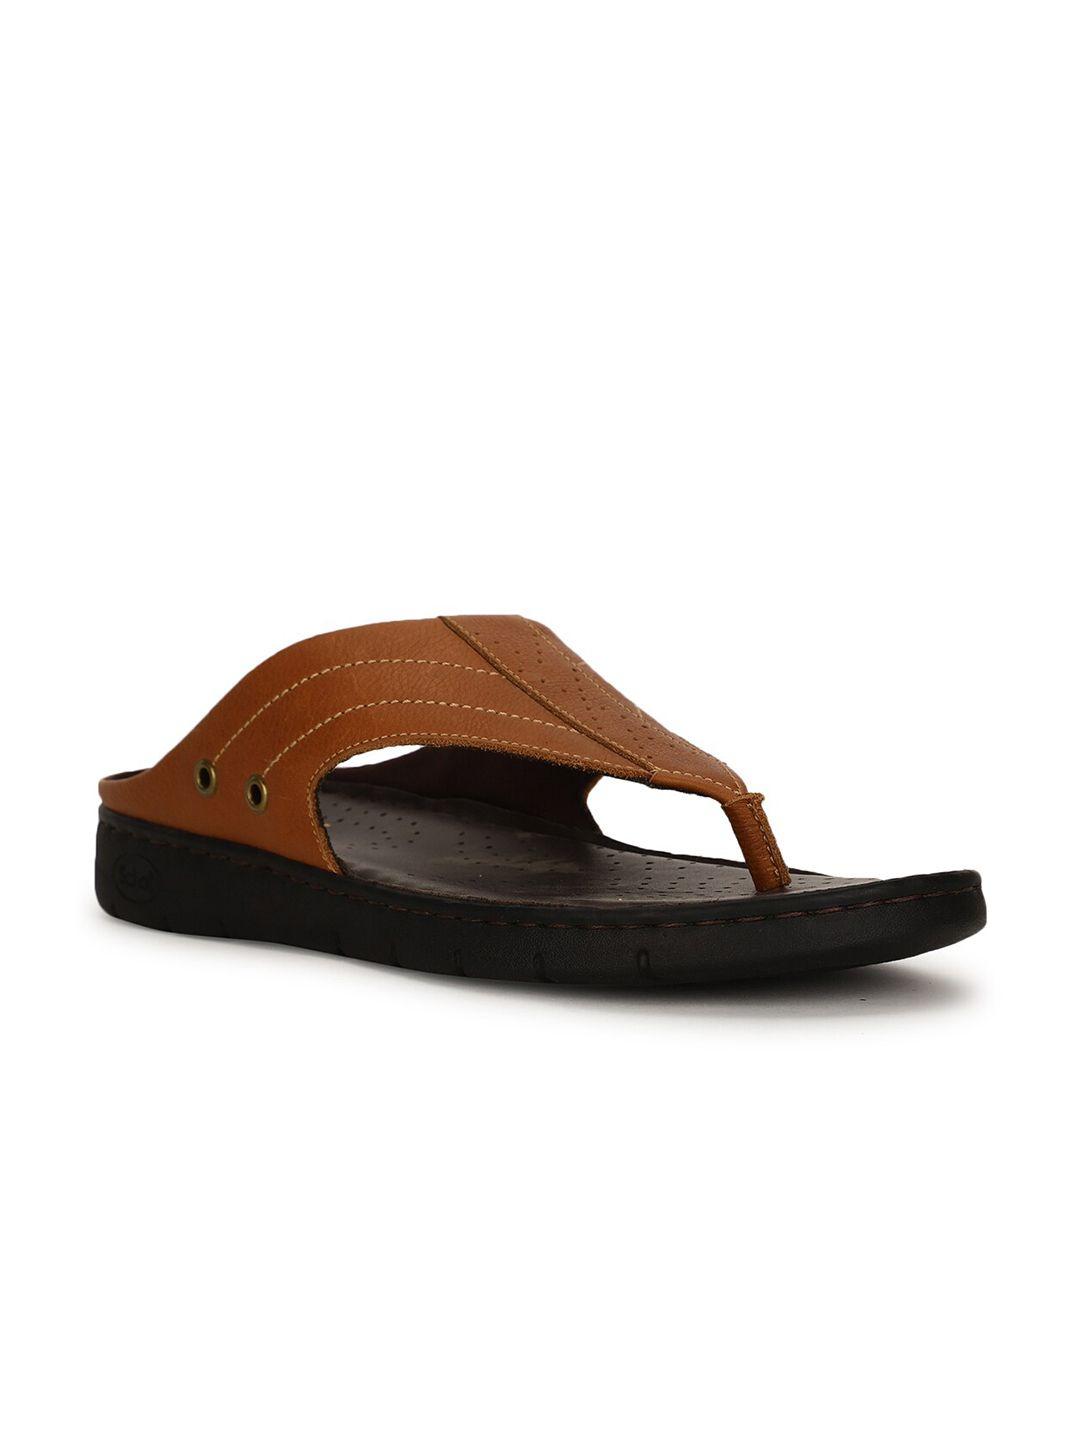 Scholl Men Tan & Black Leather Comfort Sandals